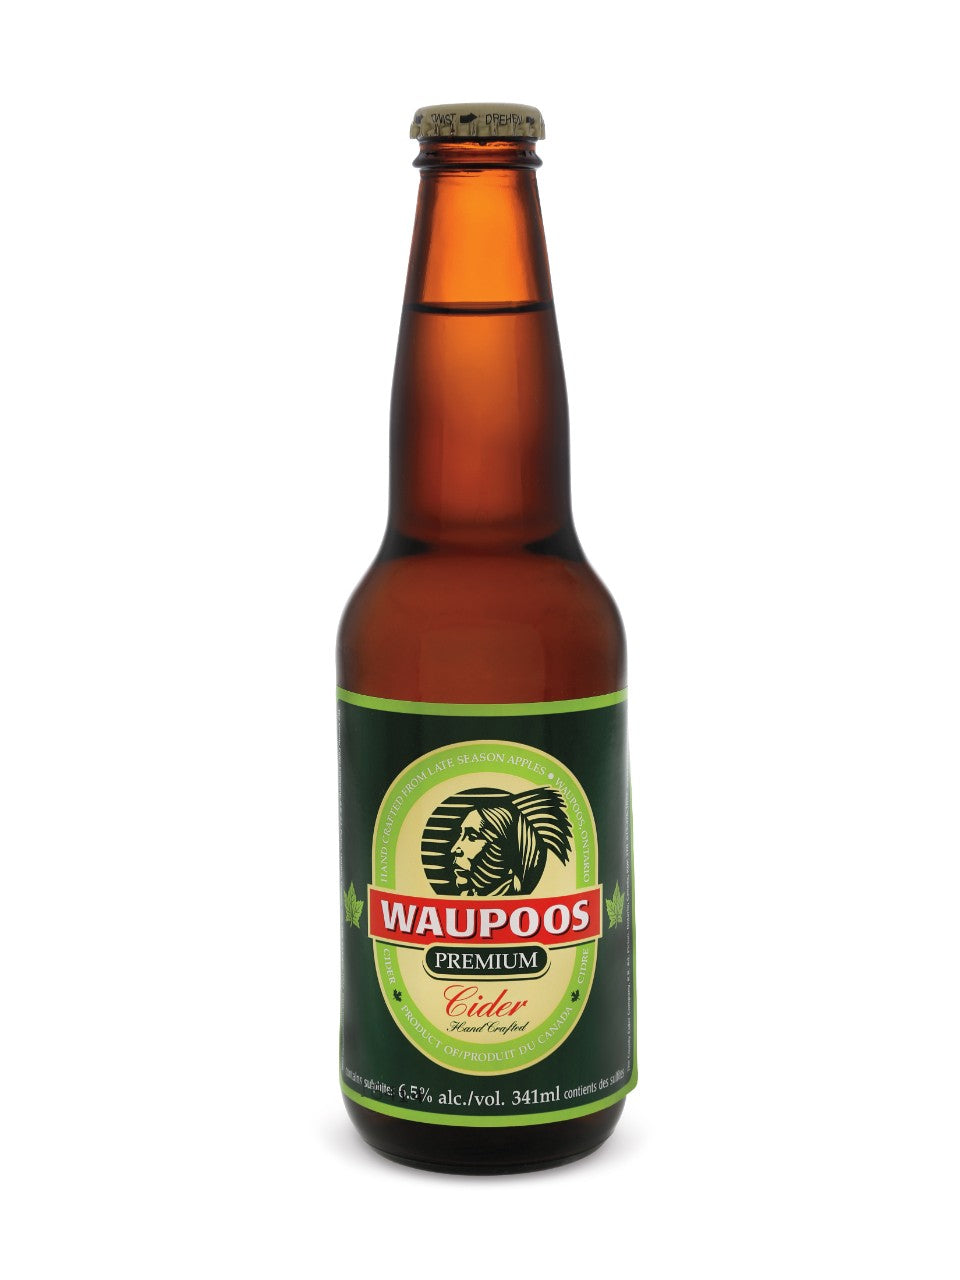 Waupoos Premium Cider 4 x 341 mL bottle